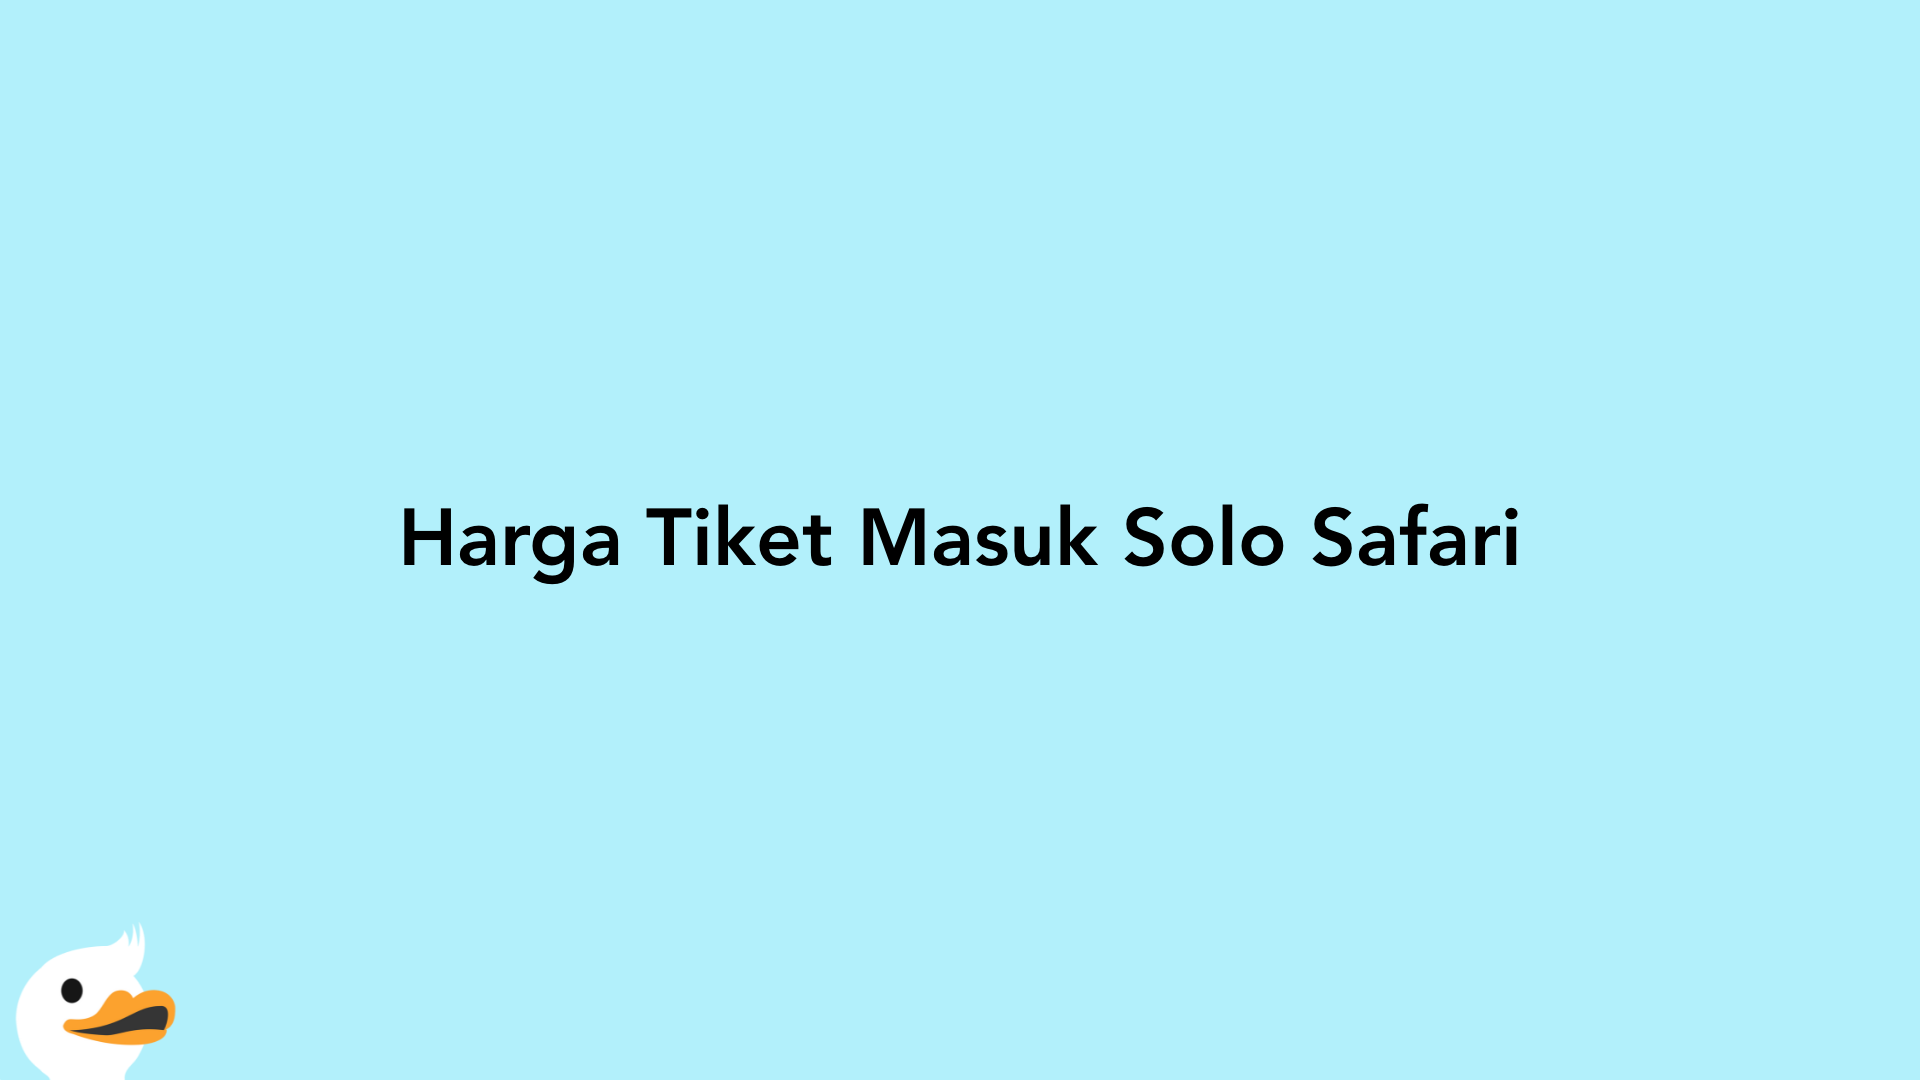 Harga Tiket Masuk Solo Safari